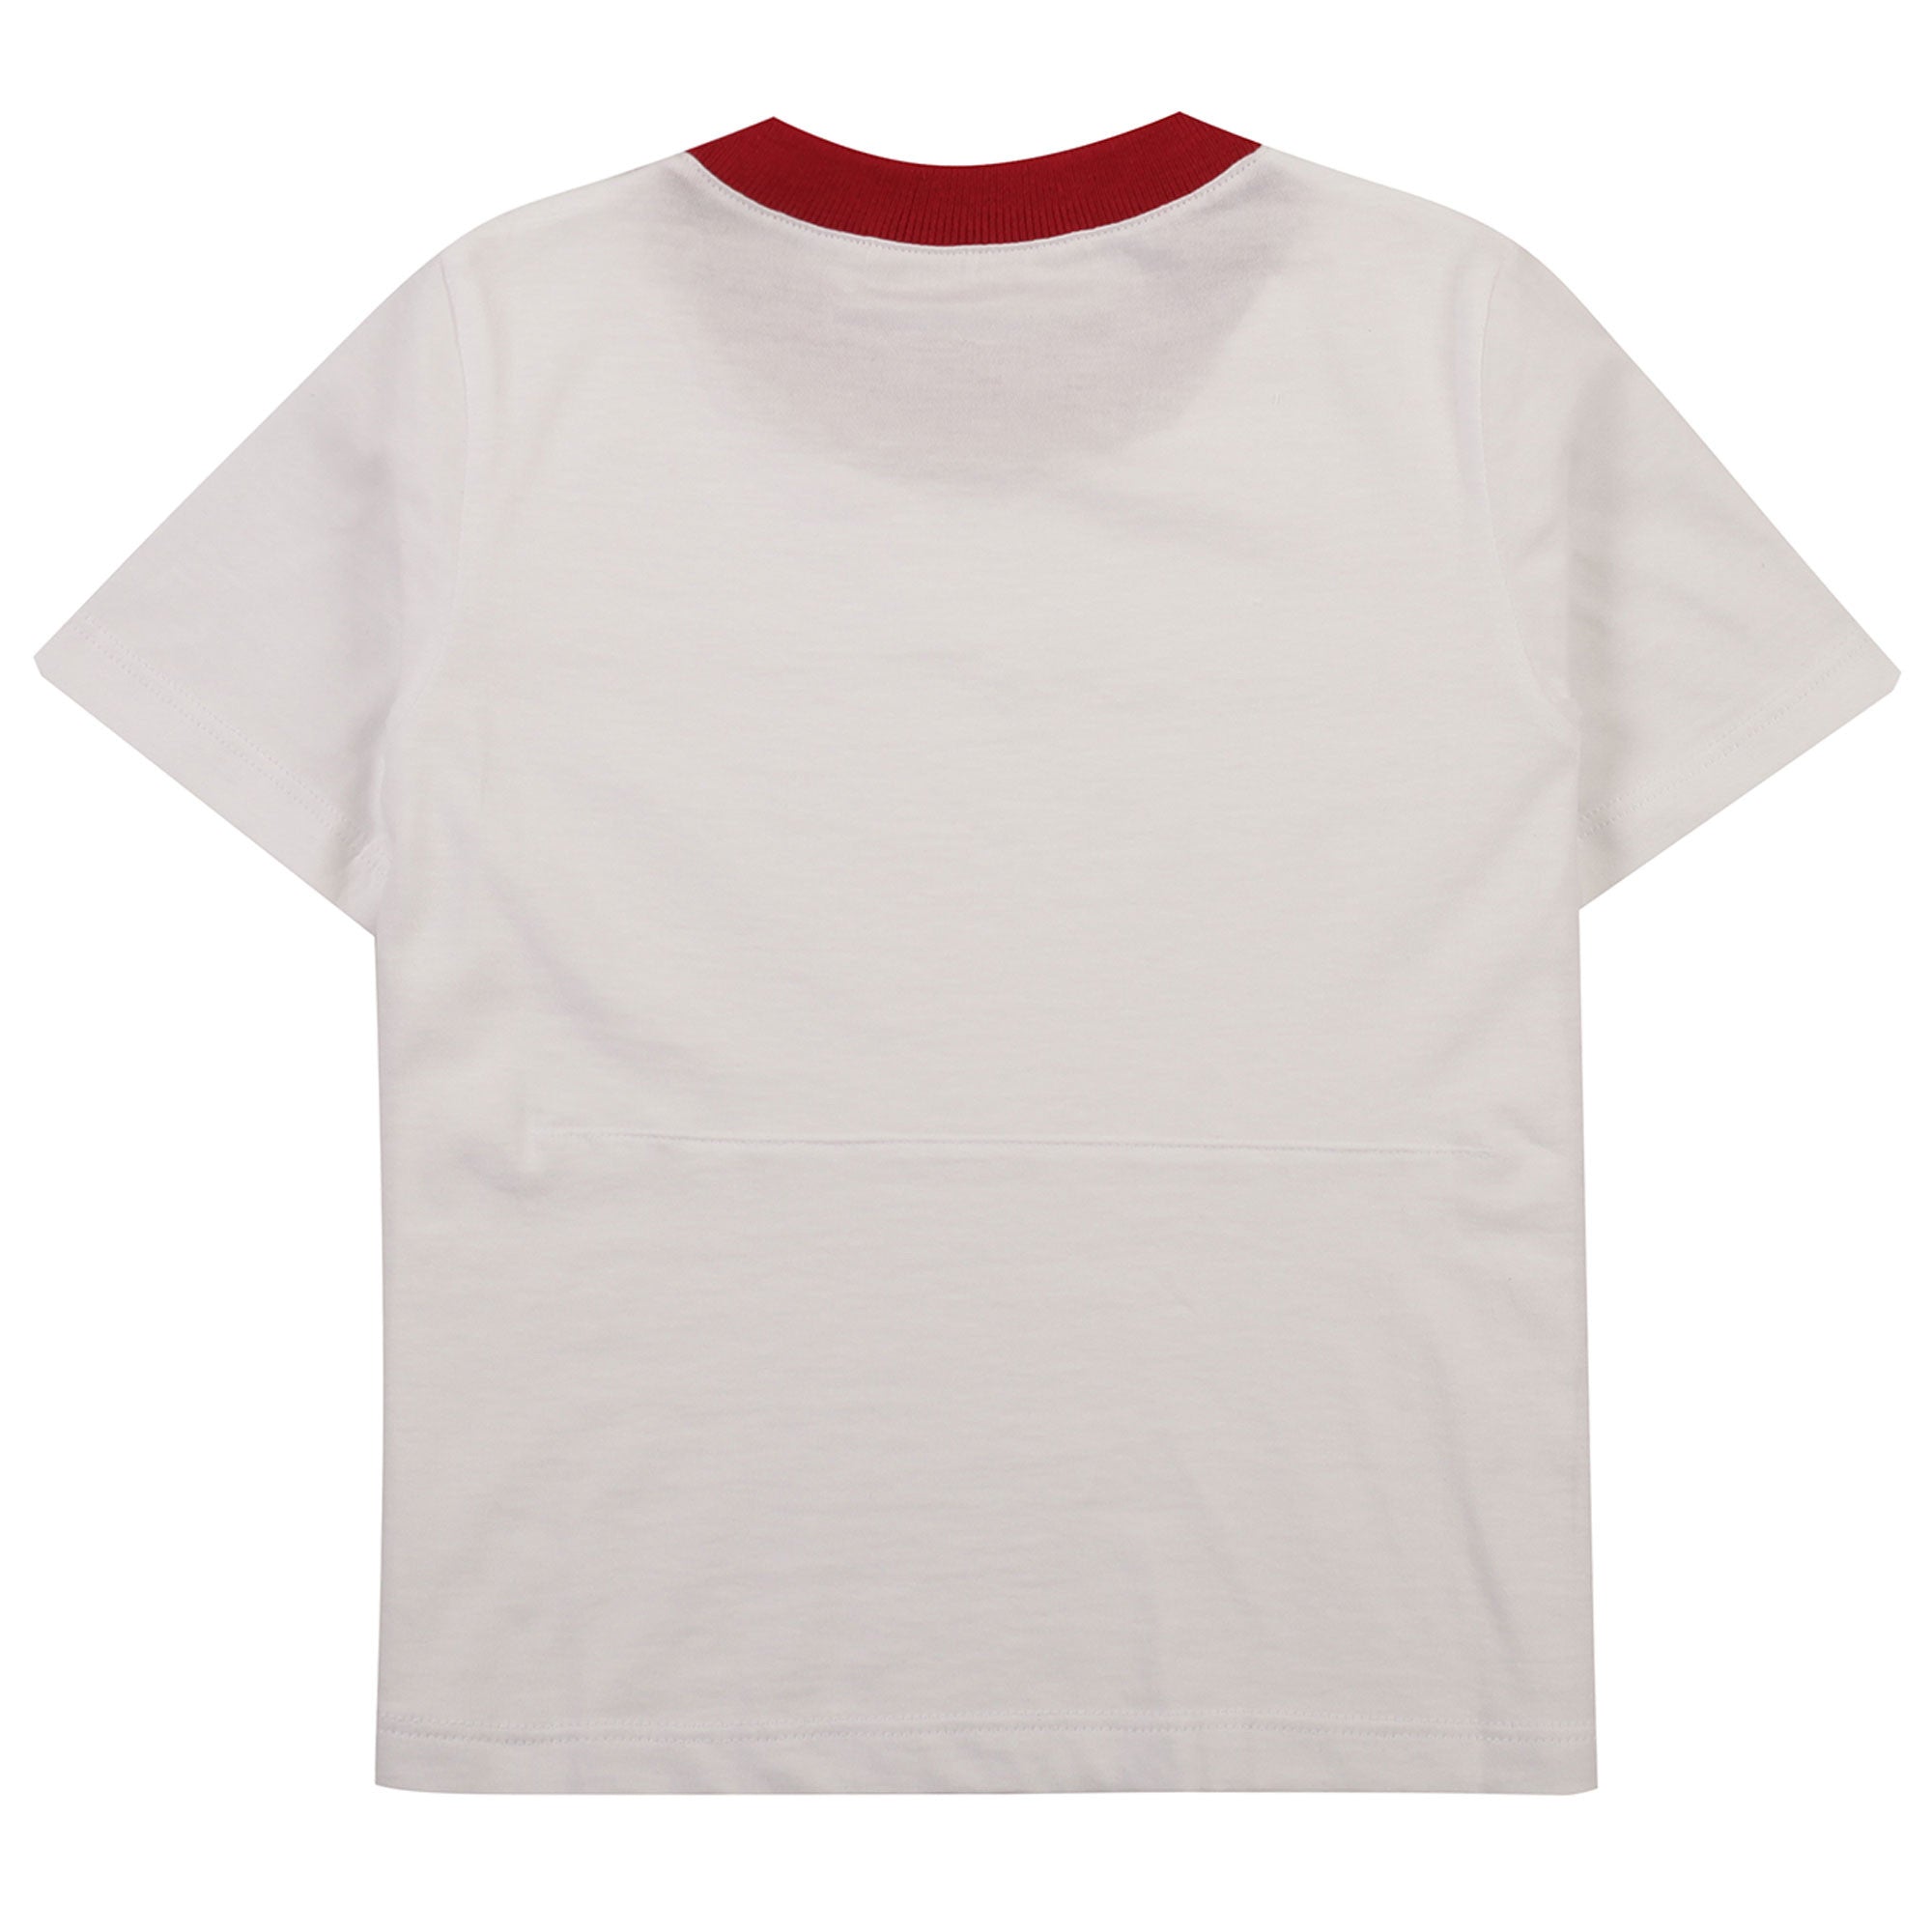 Girls White Hand-painted Printed Trims Cotton T-Shirt - CÉMAROSE | Children's Fashion Store - 2